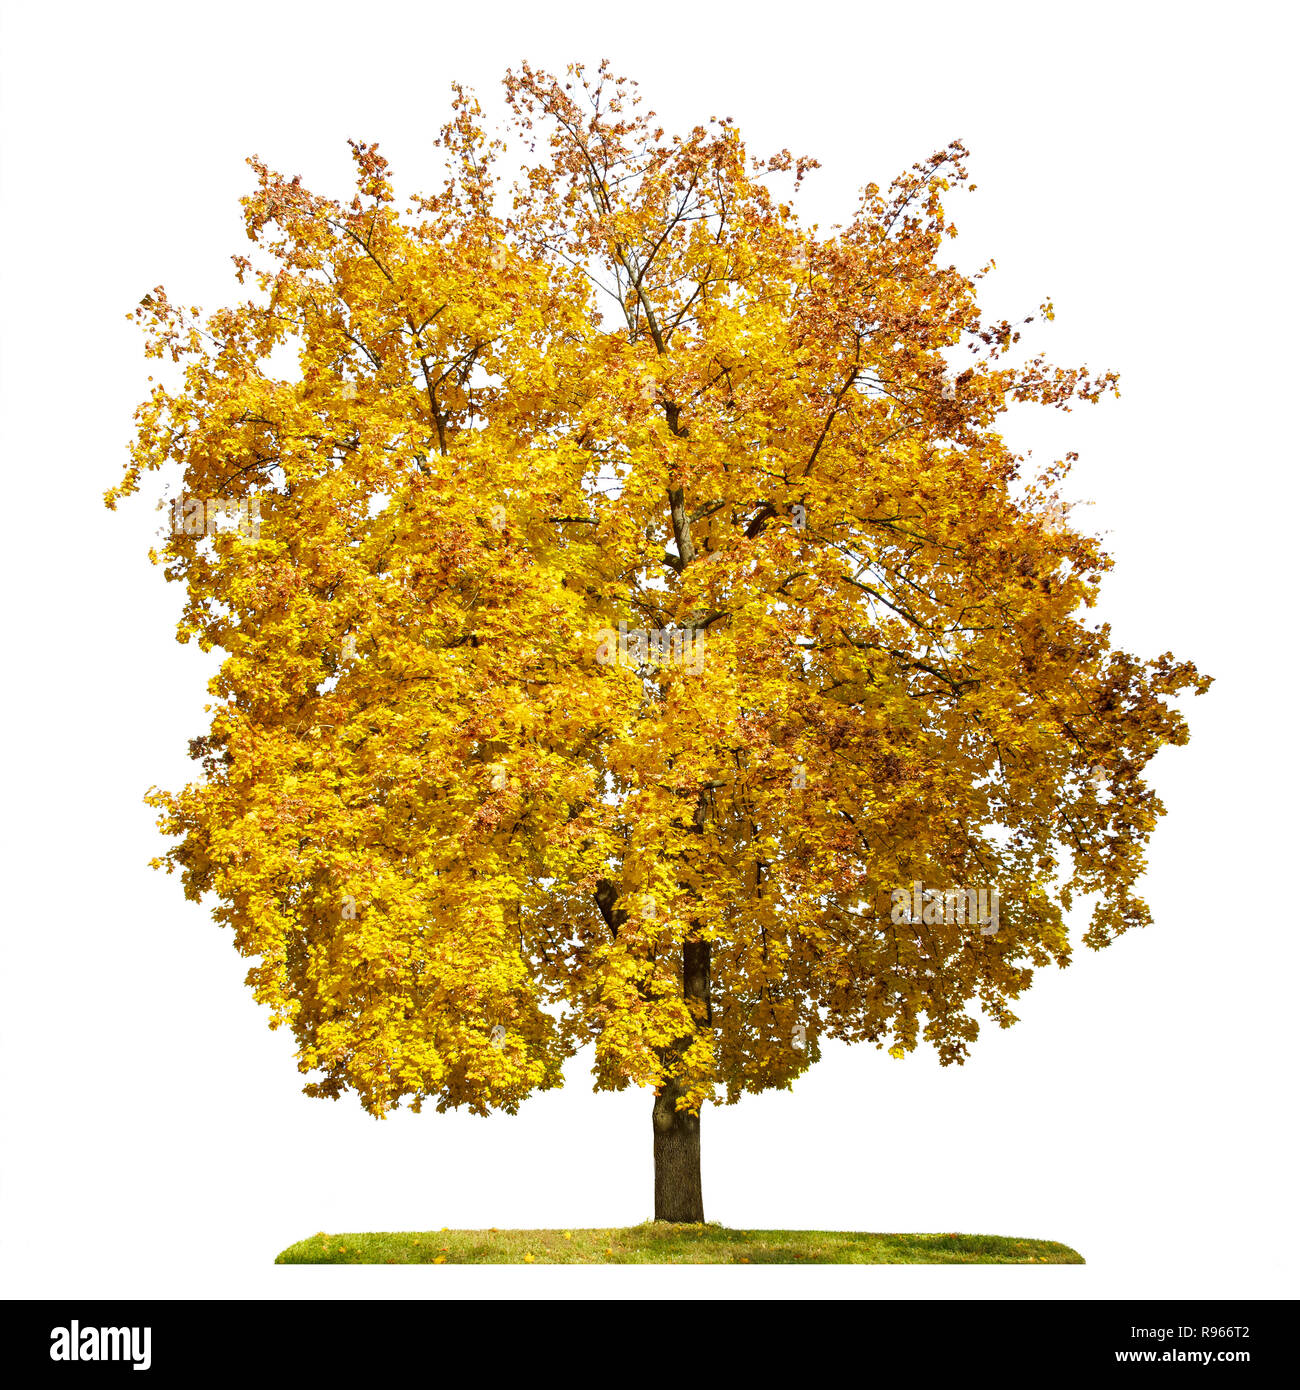 Maple tree with yellow leaves,  autumn season, isolated on white background. Stock Photo